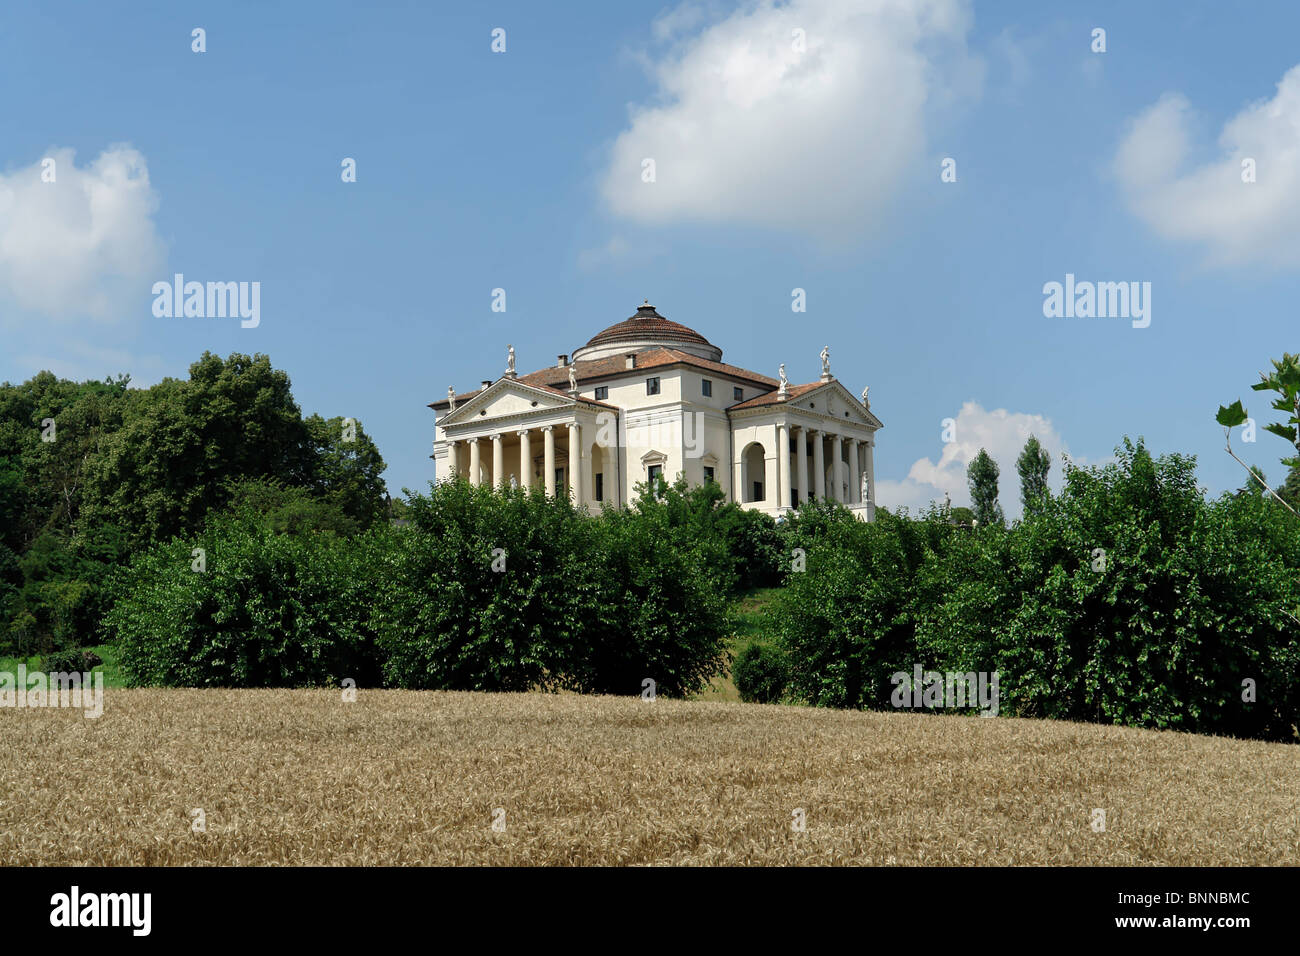 Italien Venetien Vicenza Teatro Olimpico 1580 Baumeister Andrea Palladio Gartenarchitektur Hochbau Pflanzen Platz Stockfoto